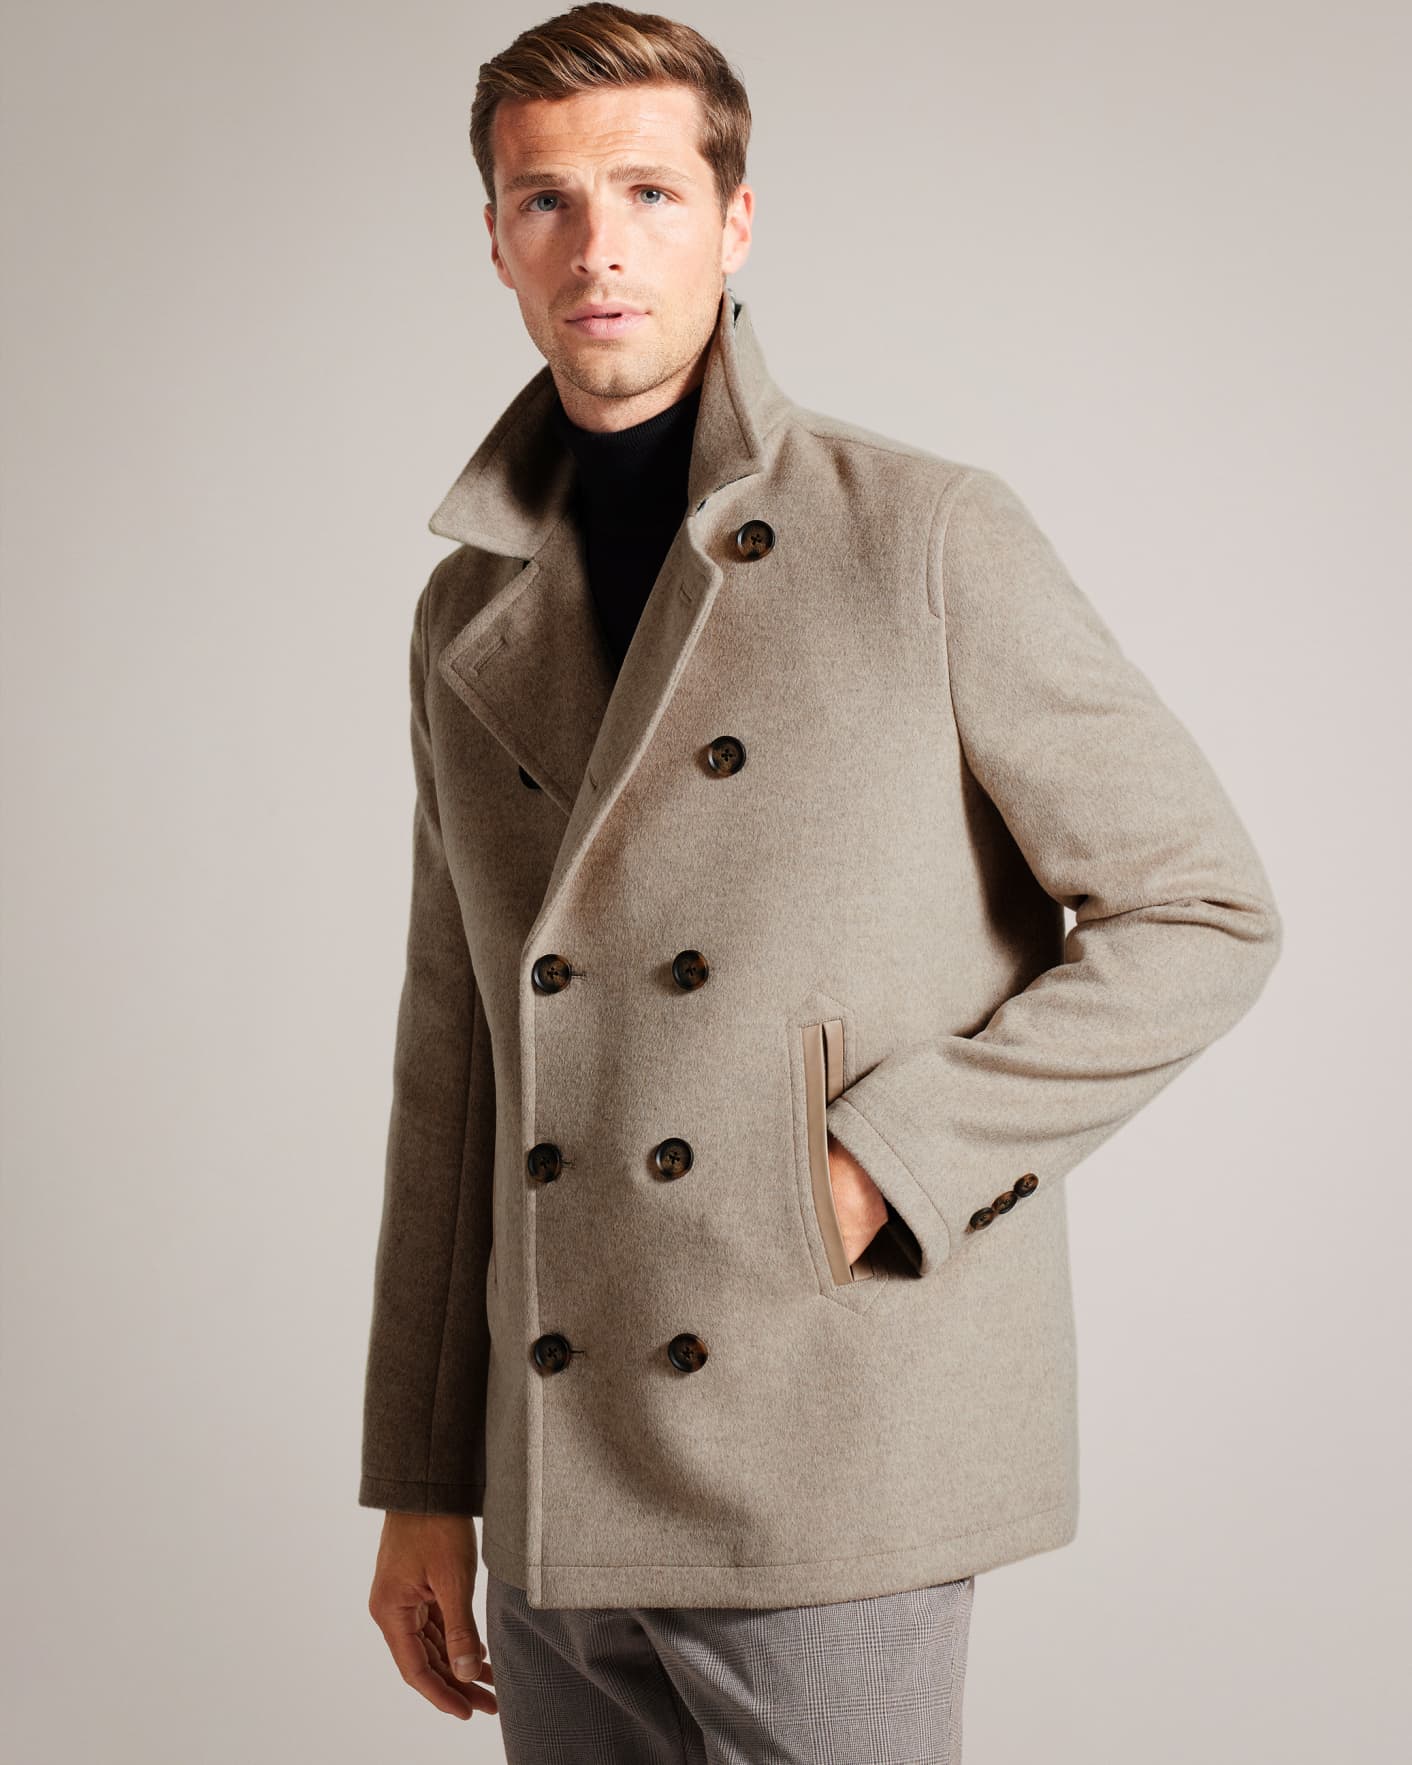 Jackets & Coats, Double Breasted Wool Coat